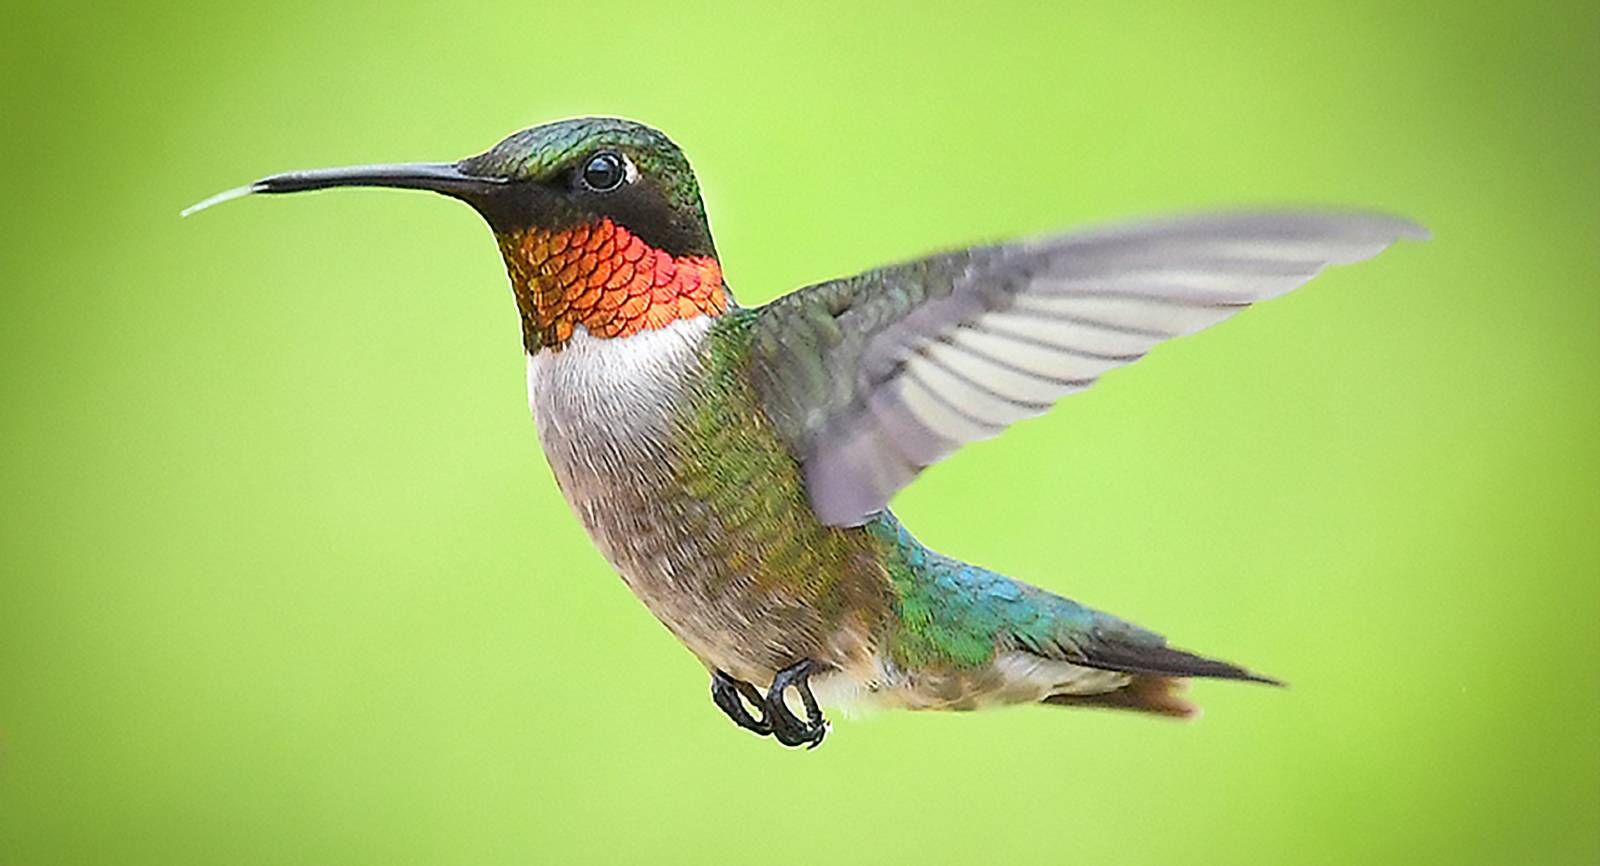 The #1 Best Hummingbird Feeder Ever